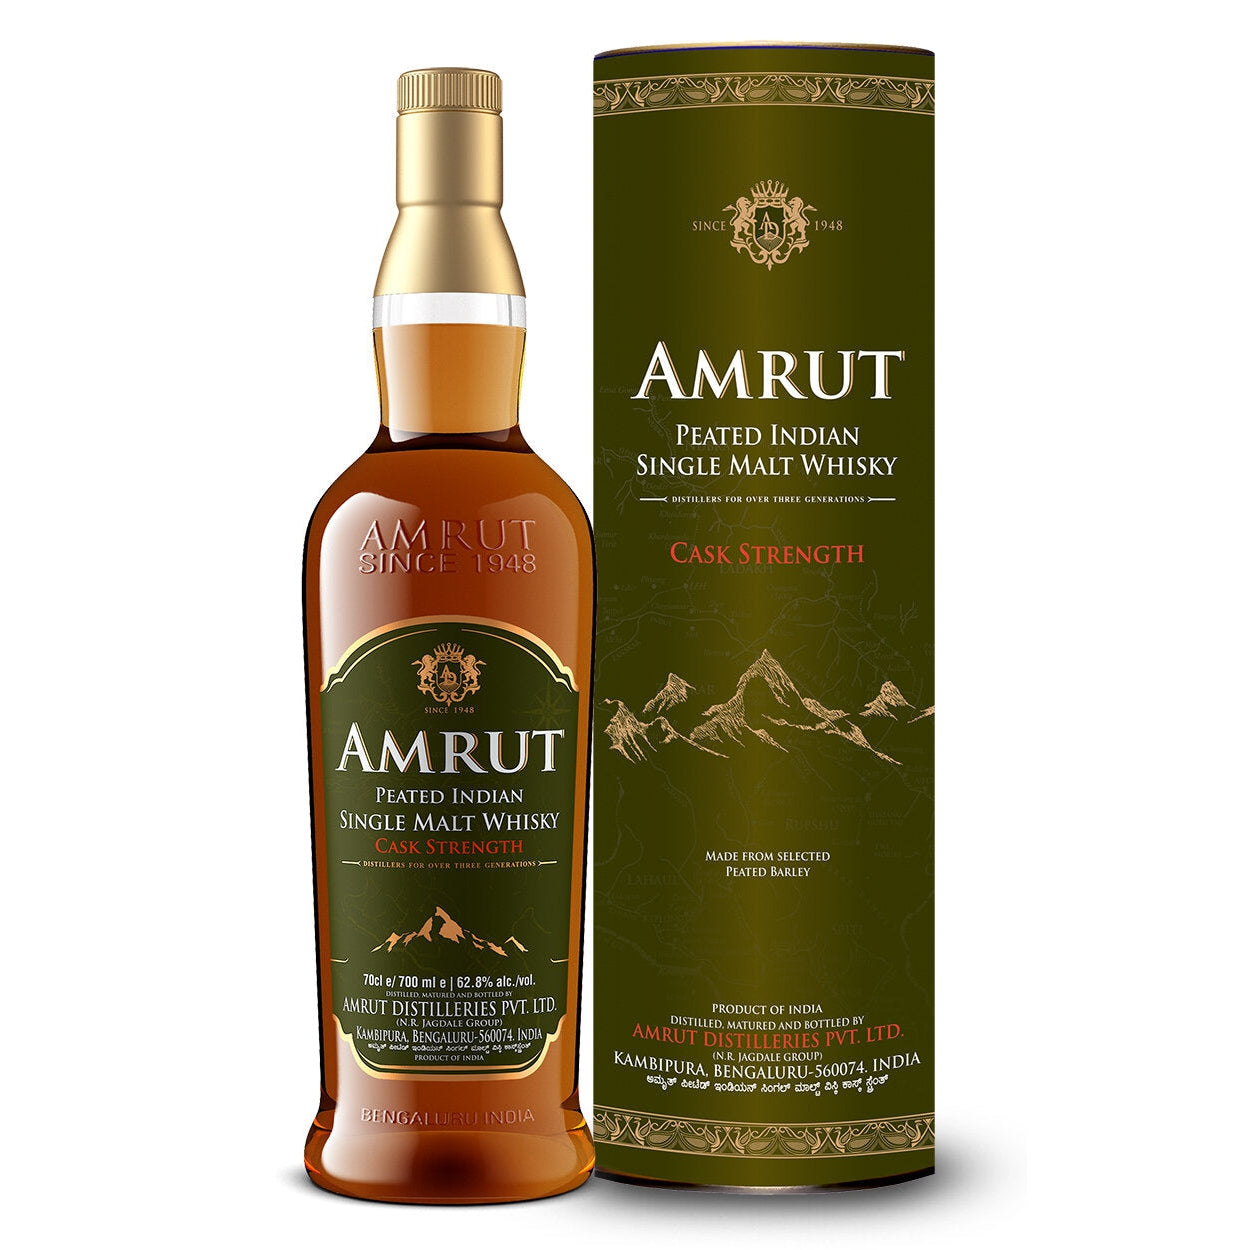 Amrut+PEATED+Indian+Single+Malt+Whisky+CASK+STRENGTH+62,8%+Vol.+0,7l+in+Tinbox